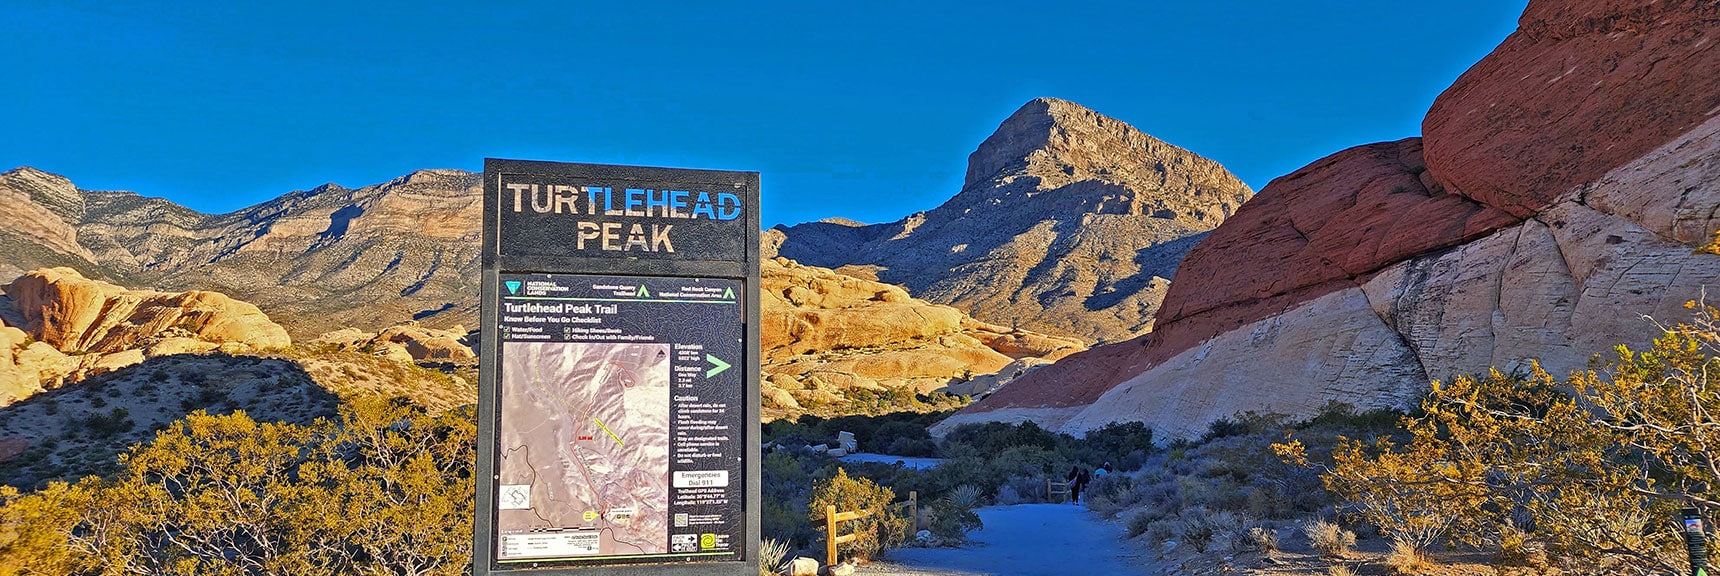 Turtlehead Peak Trailhead Sign at Sandstone Quarry Parking Area | Turtlehead Peak | Red Rock Canyon National Conservation Area, Nevada